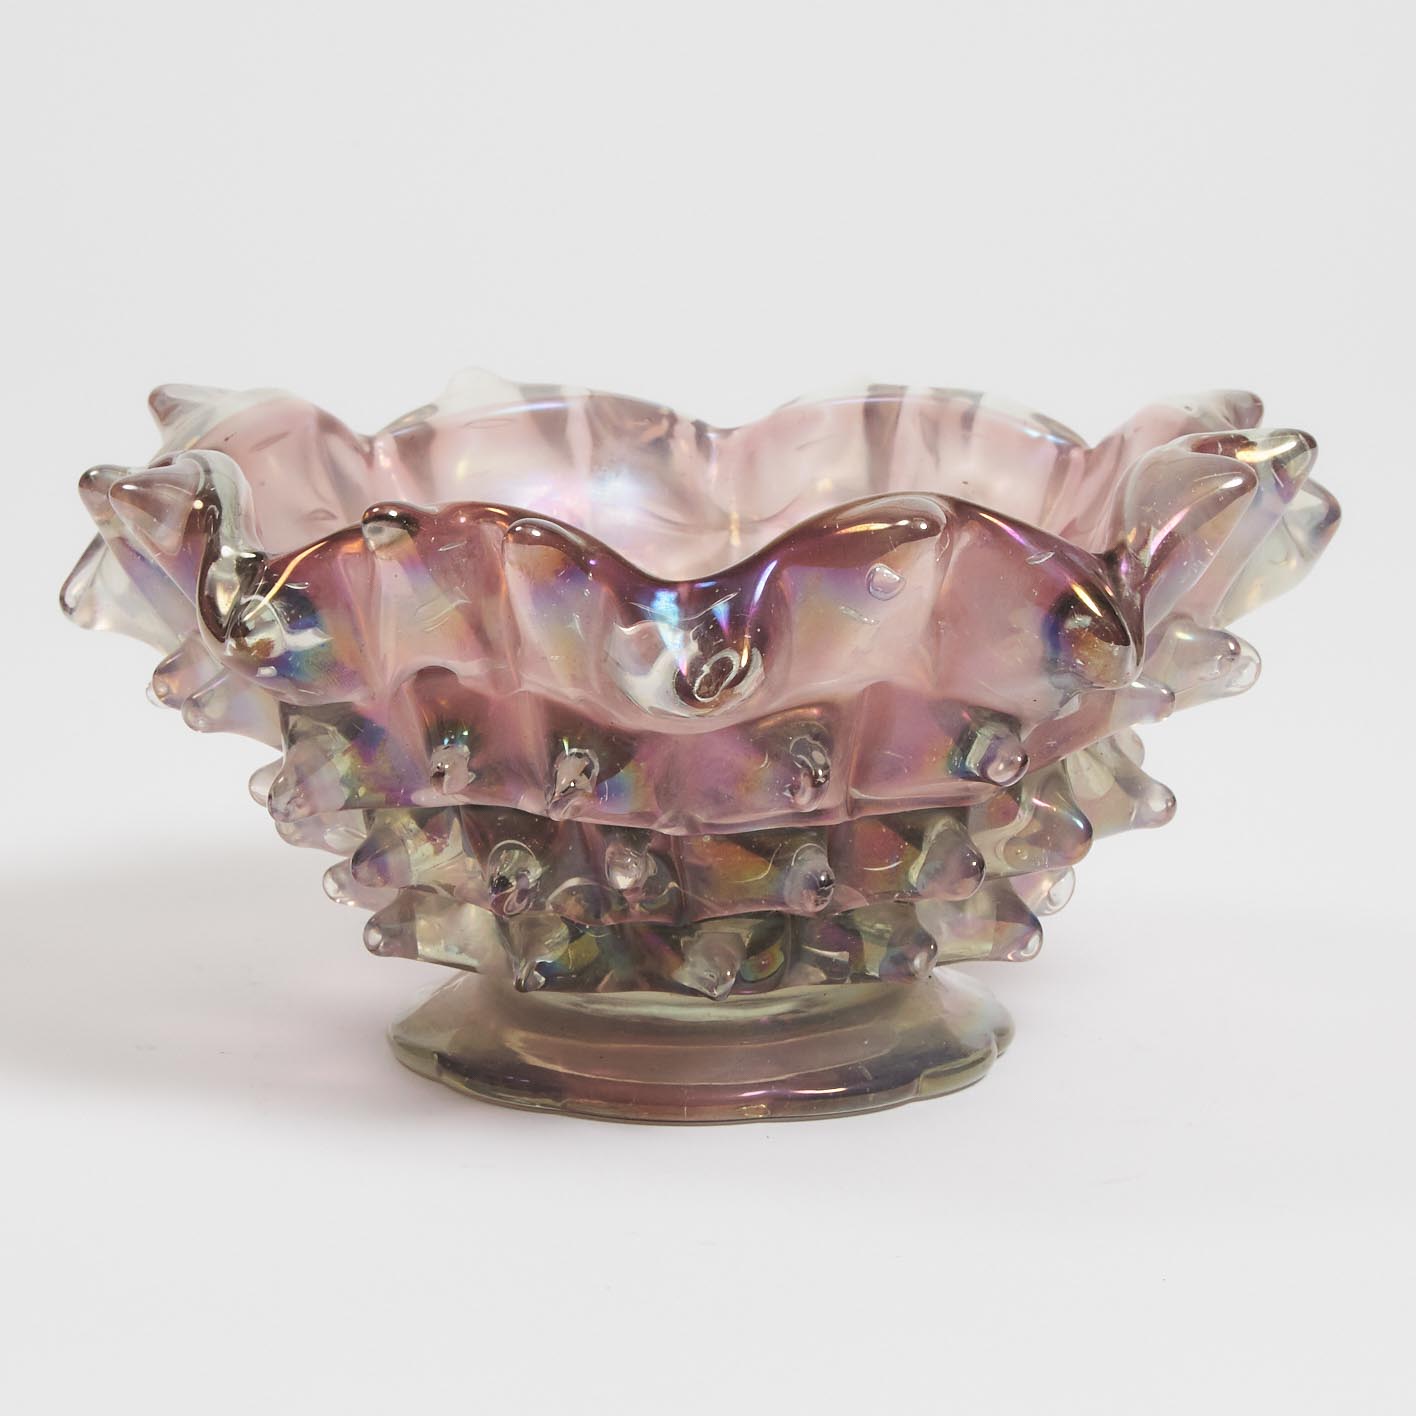 Barovier & Toso 'Medusa' Iridescent Glass Bowl, c.1940